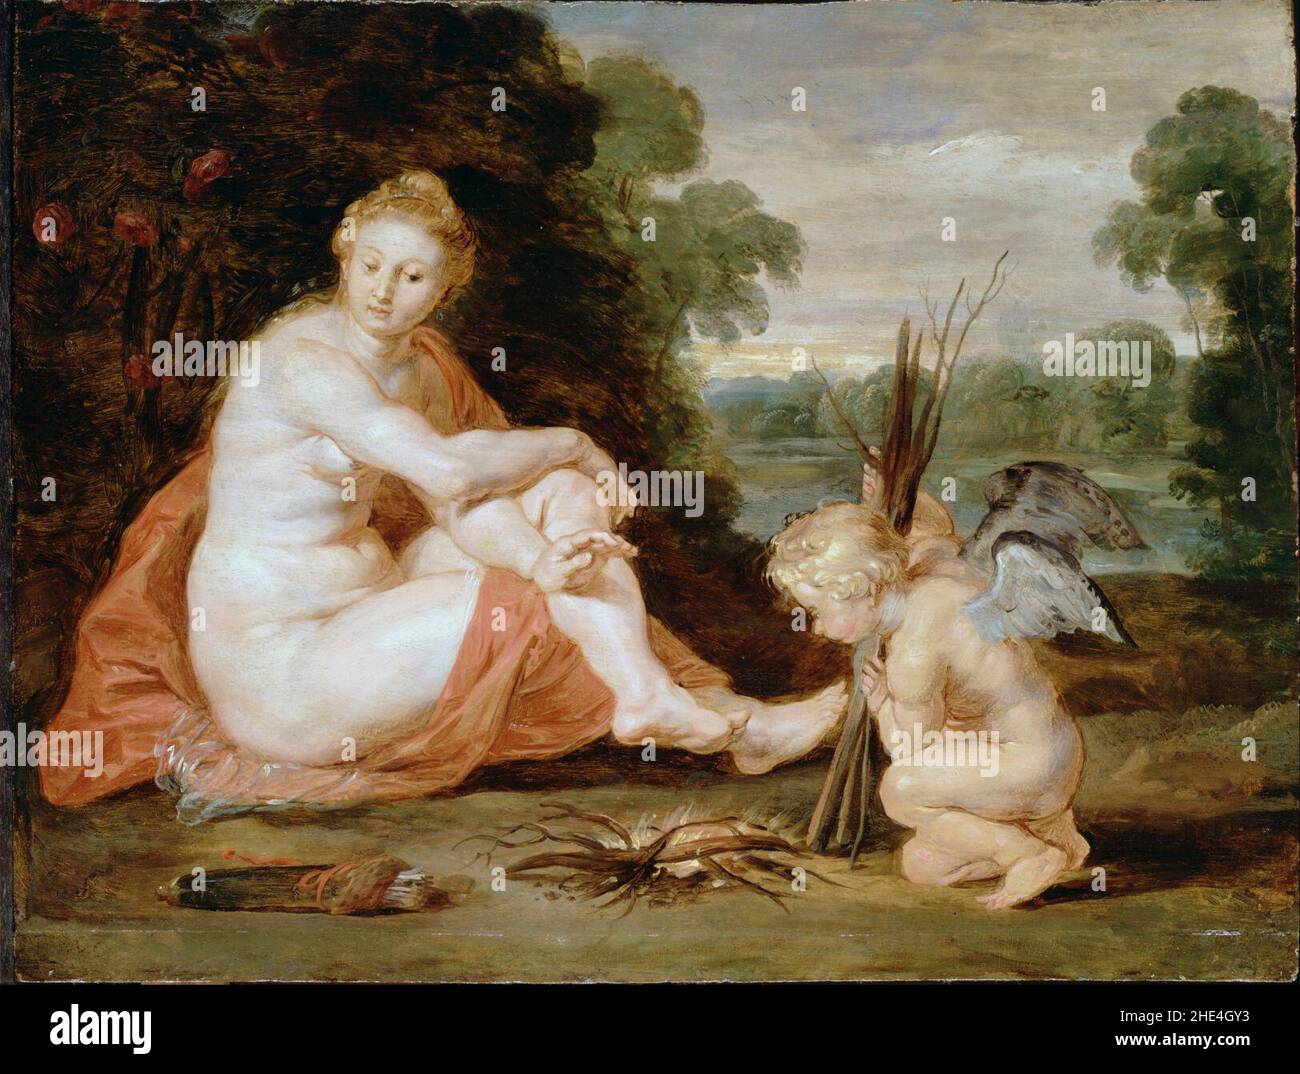 Rubens, Sir Peter Paul - Venus and Cupid warming themselves (Venus frigida) Stock Photo